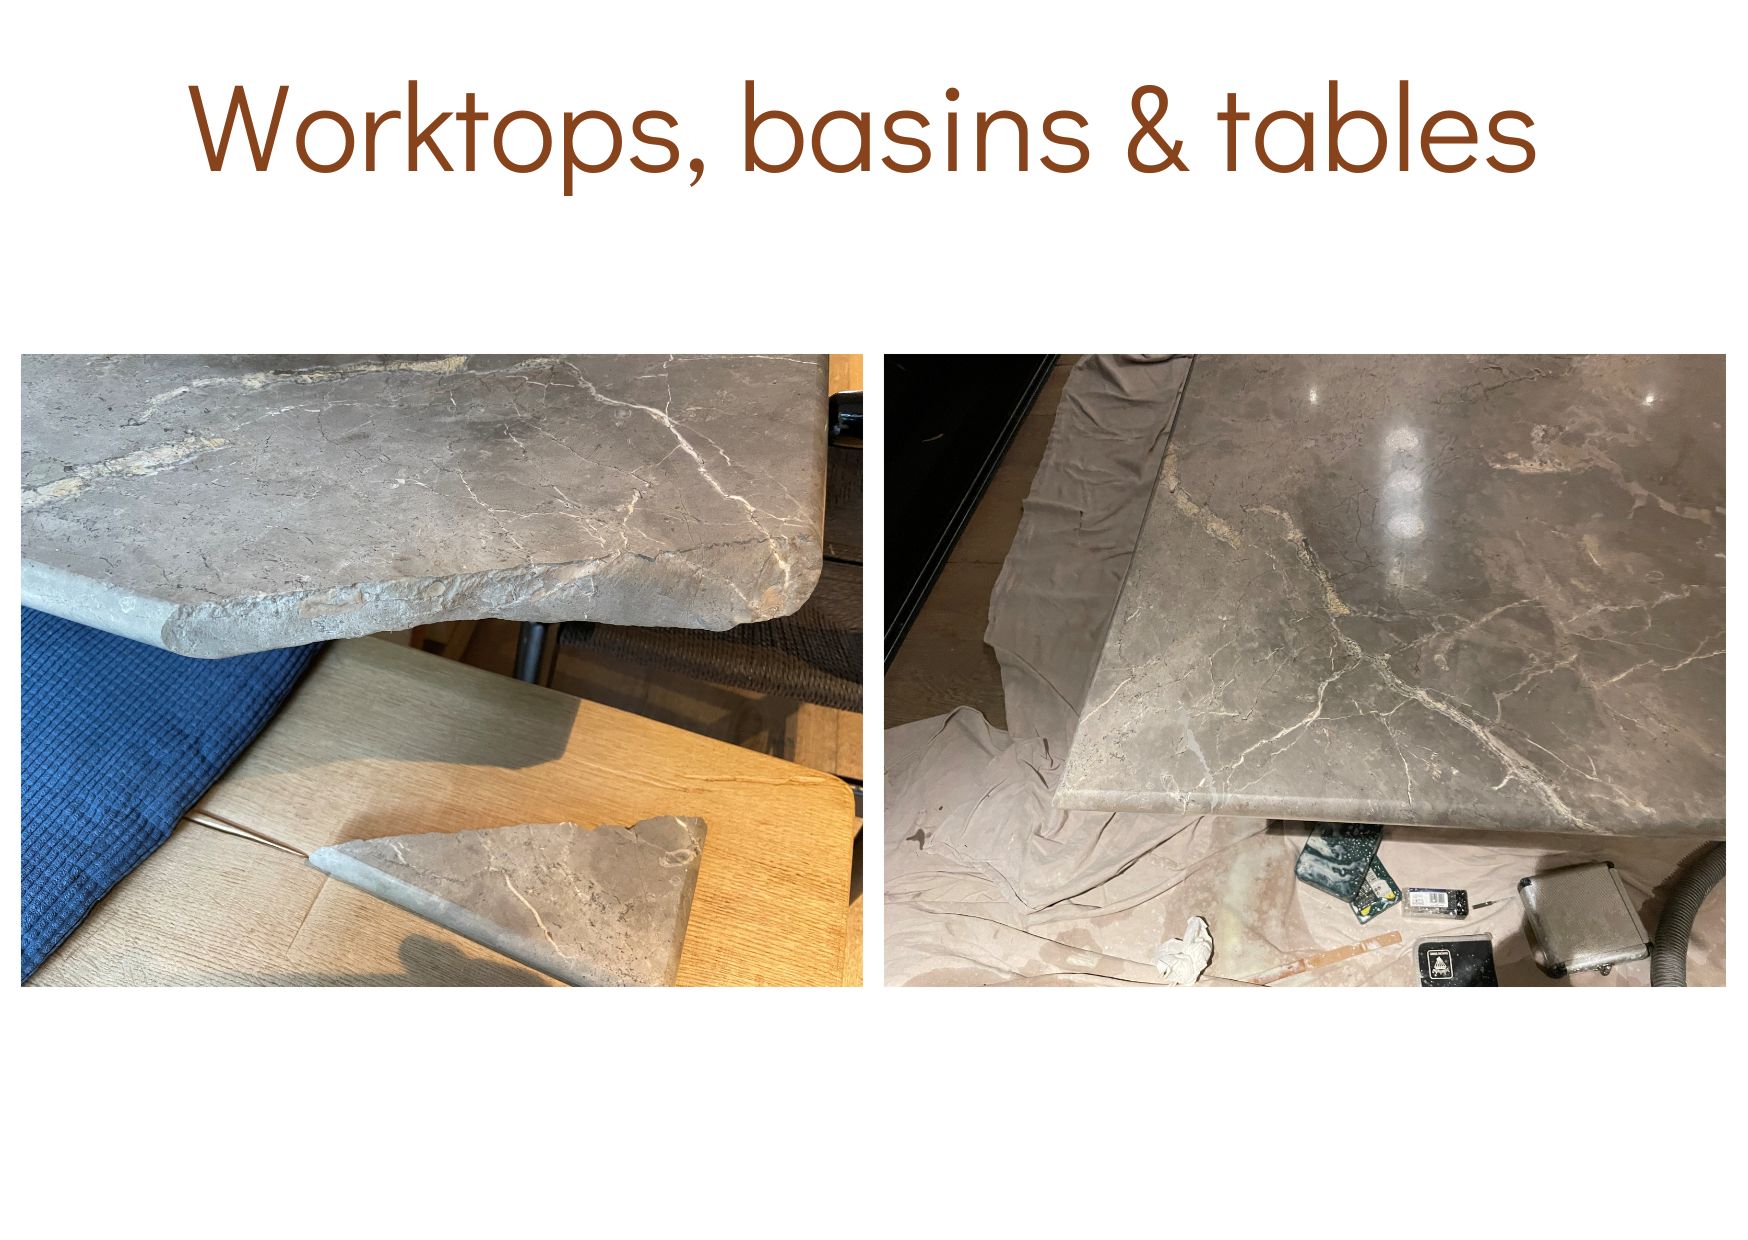 Worktops, basins & tables